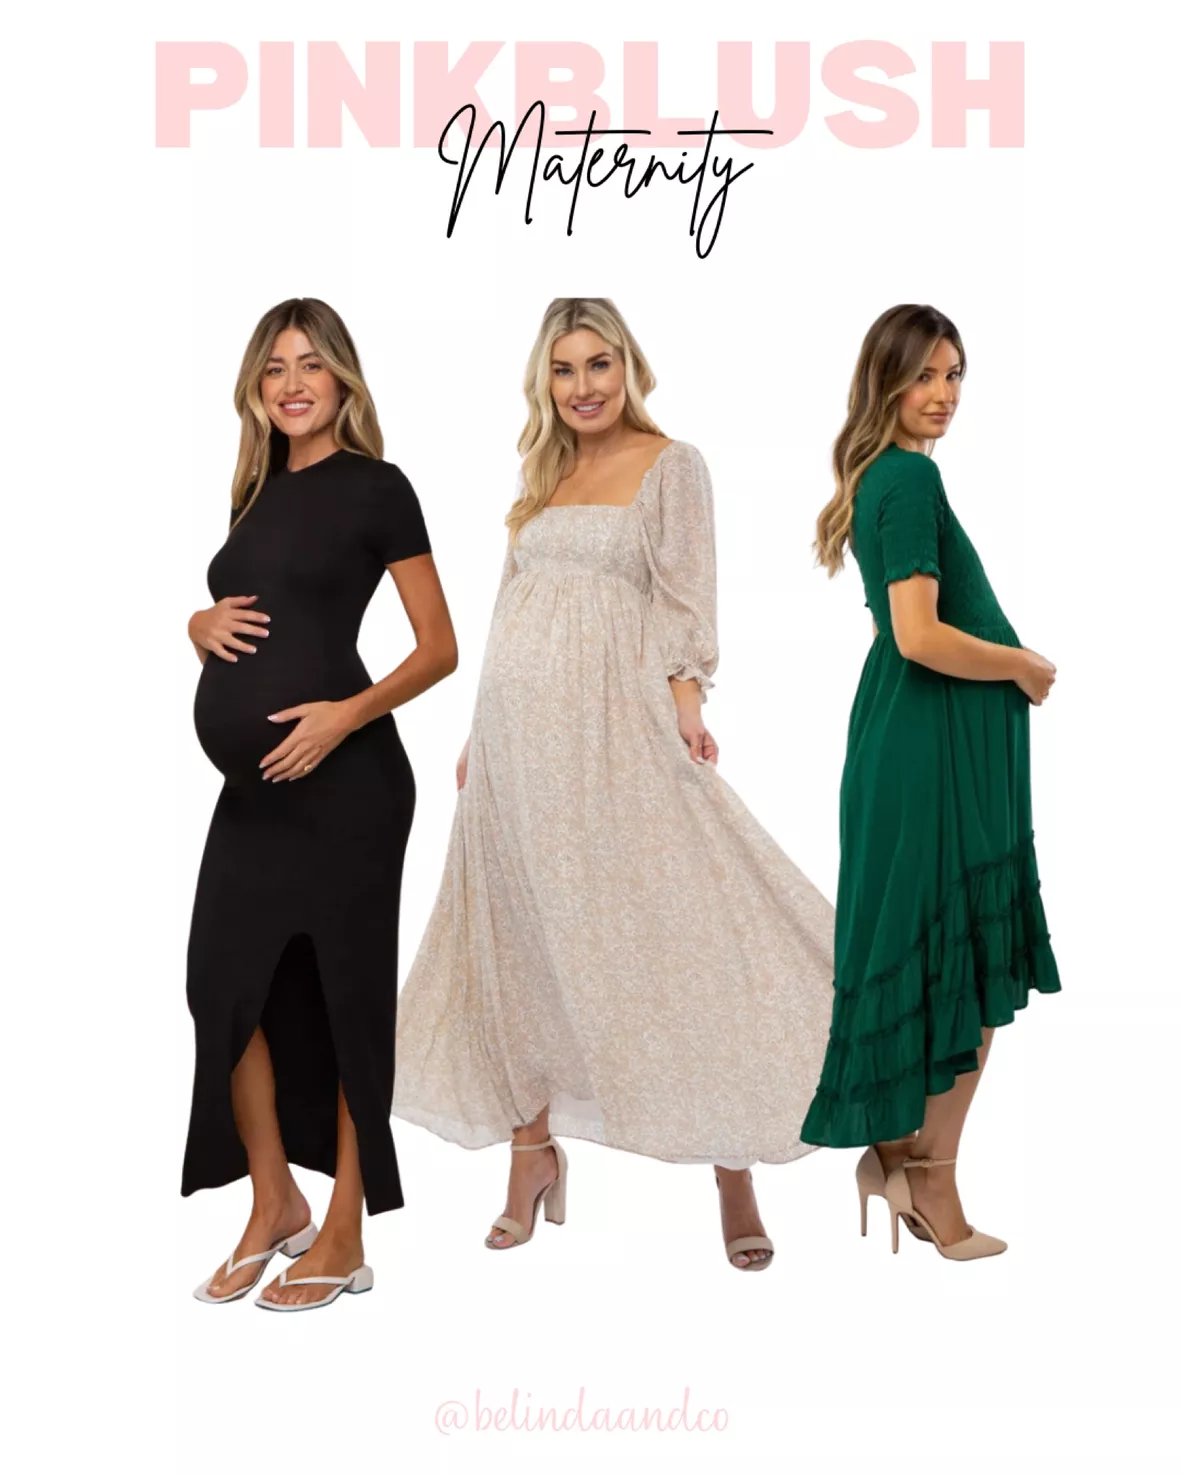  PINKBLUSH: Maternity Dresses